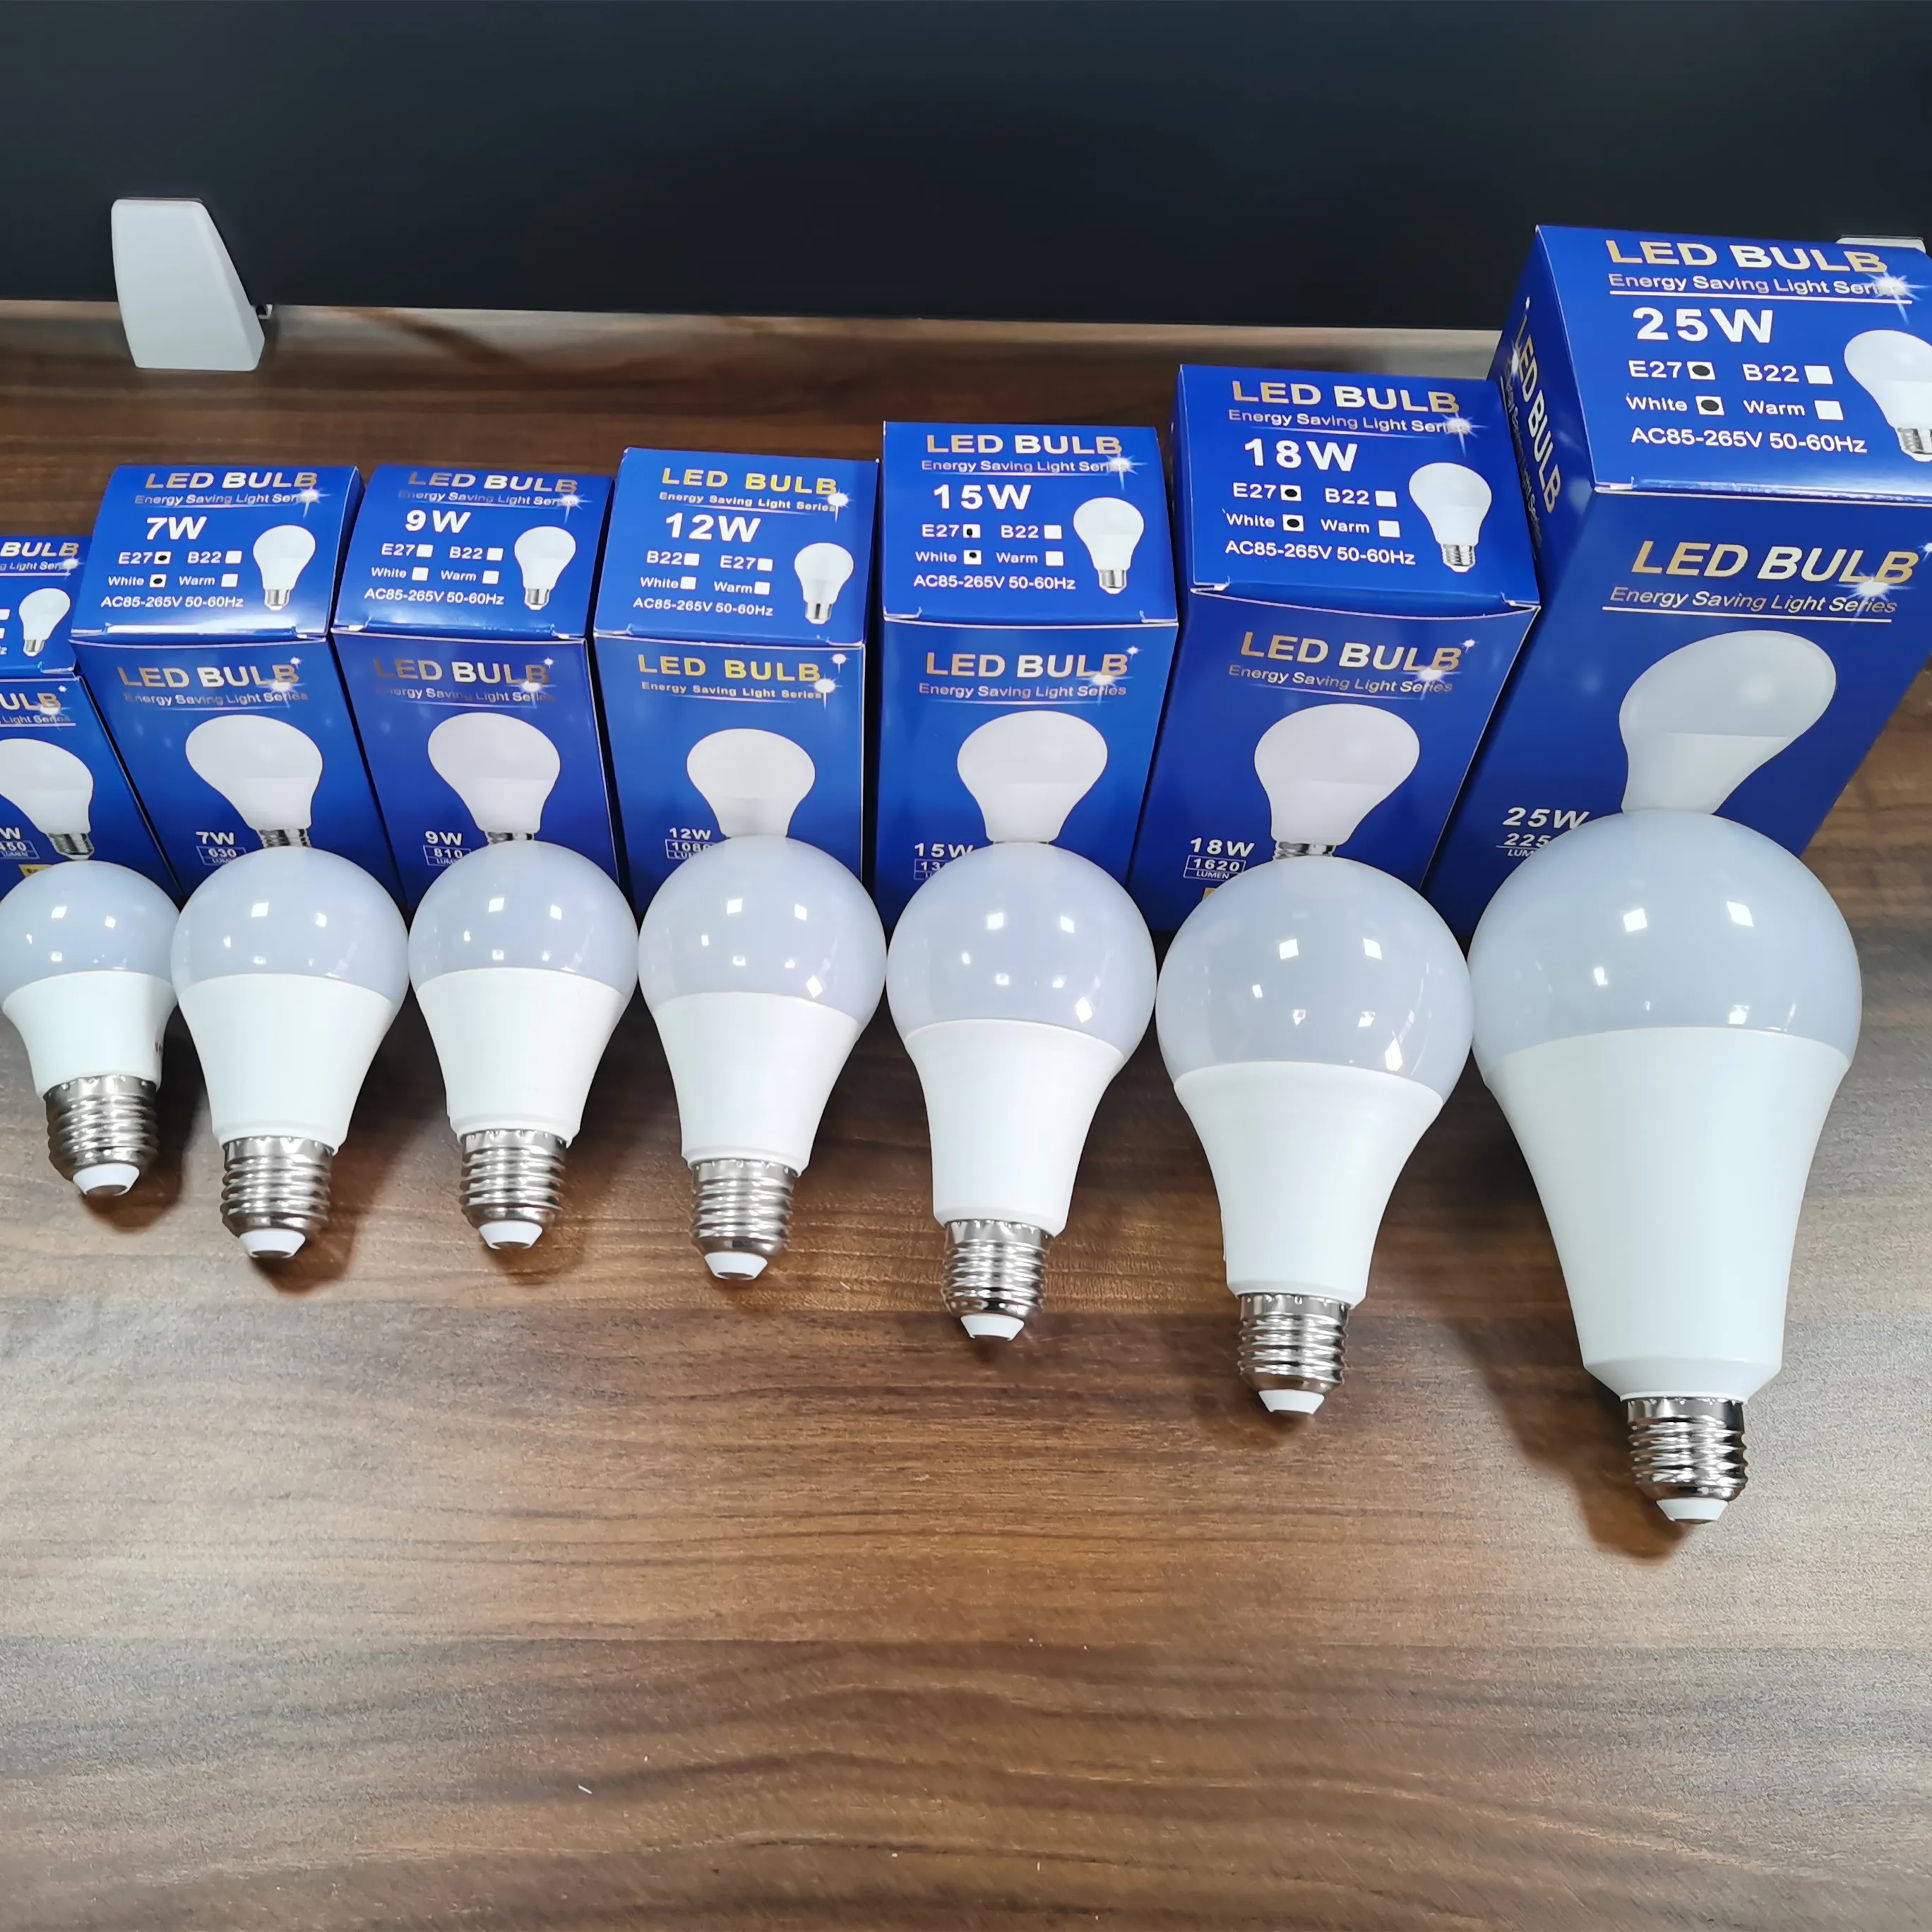 Wholesale 3W 6W 9W 12W 15W 18W 20W LED Bulb Lamps E27 E14 Bulb 220V-240V Smart IC High Brightness Lampada LED Bombillas From m.alibaba.com